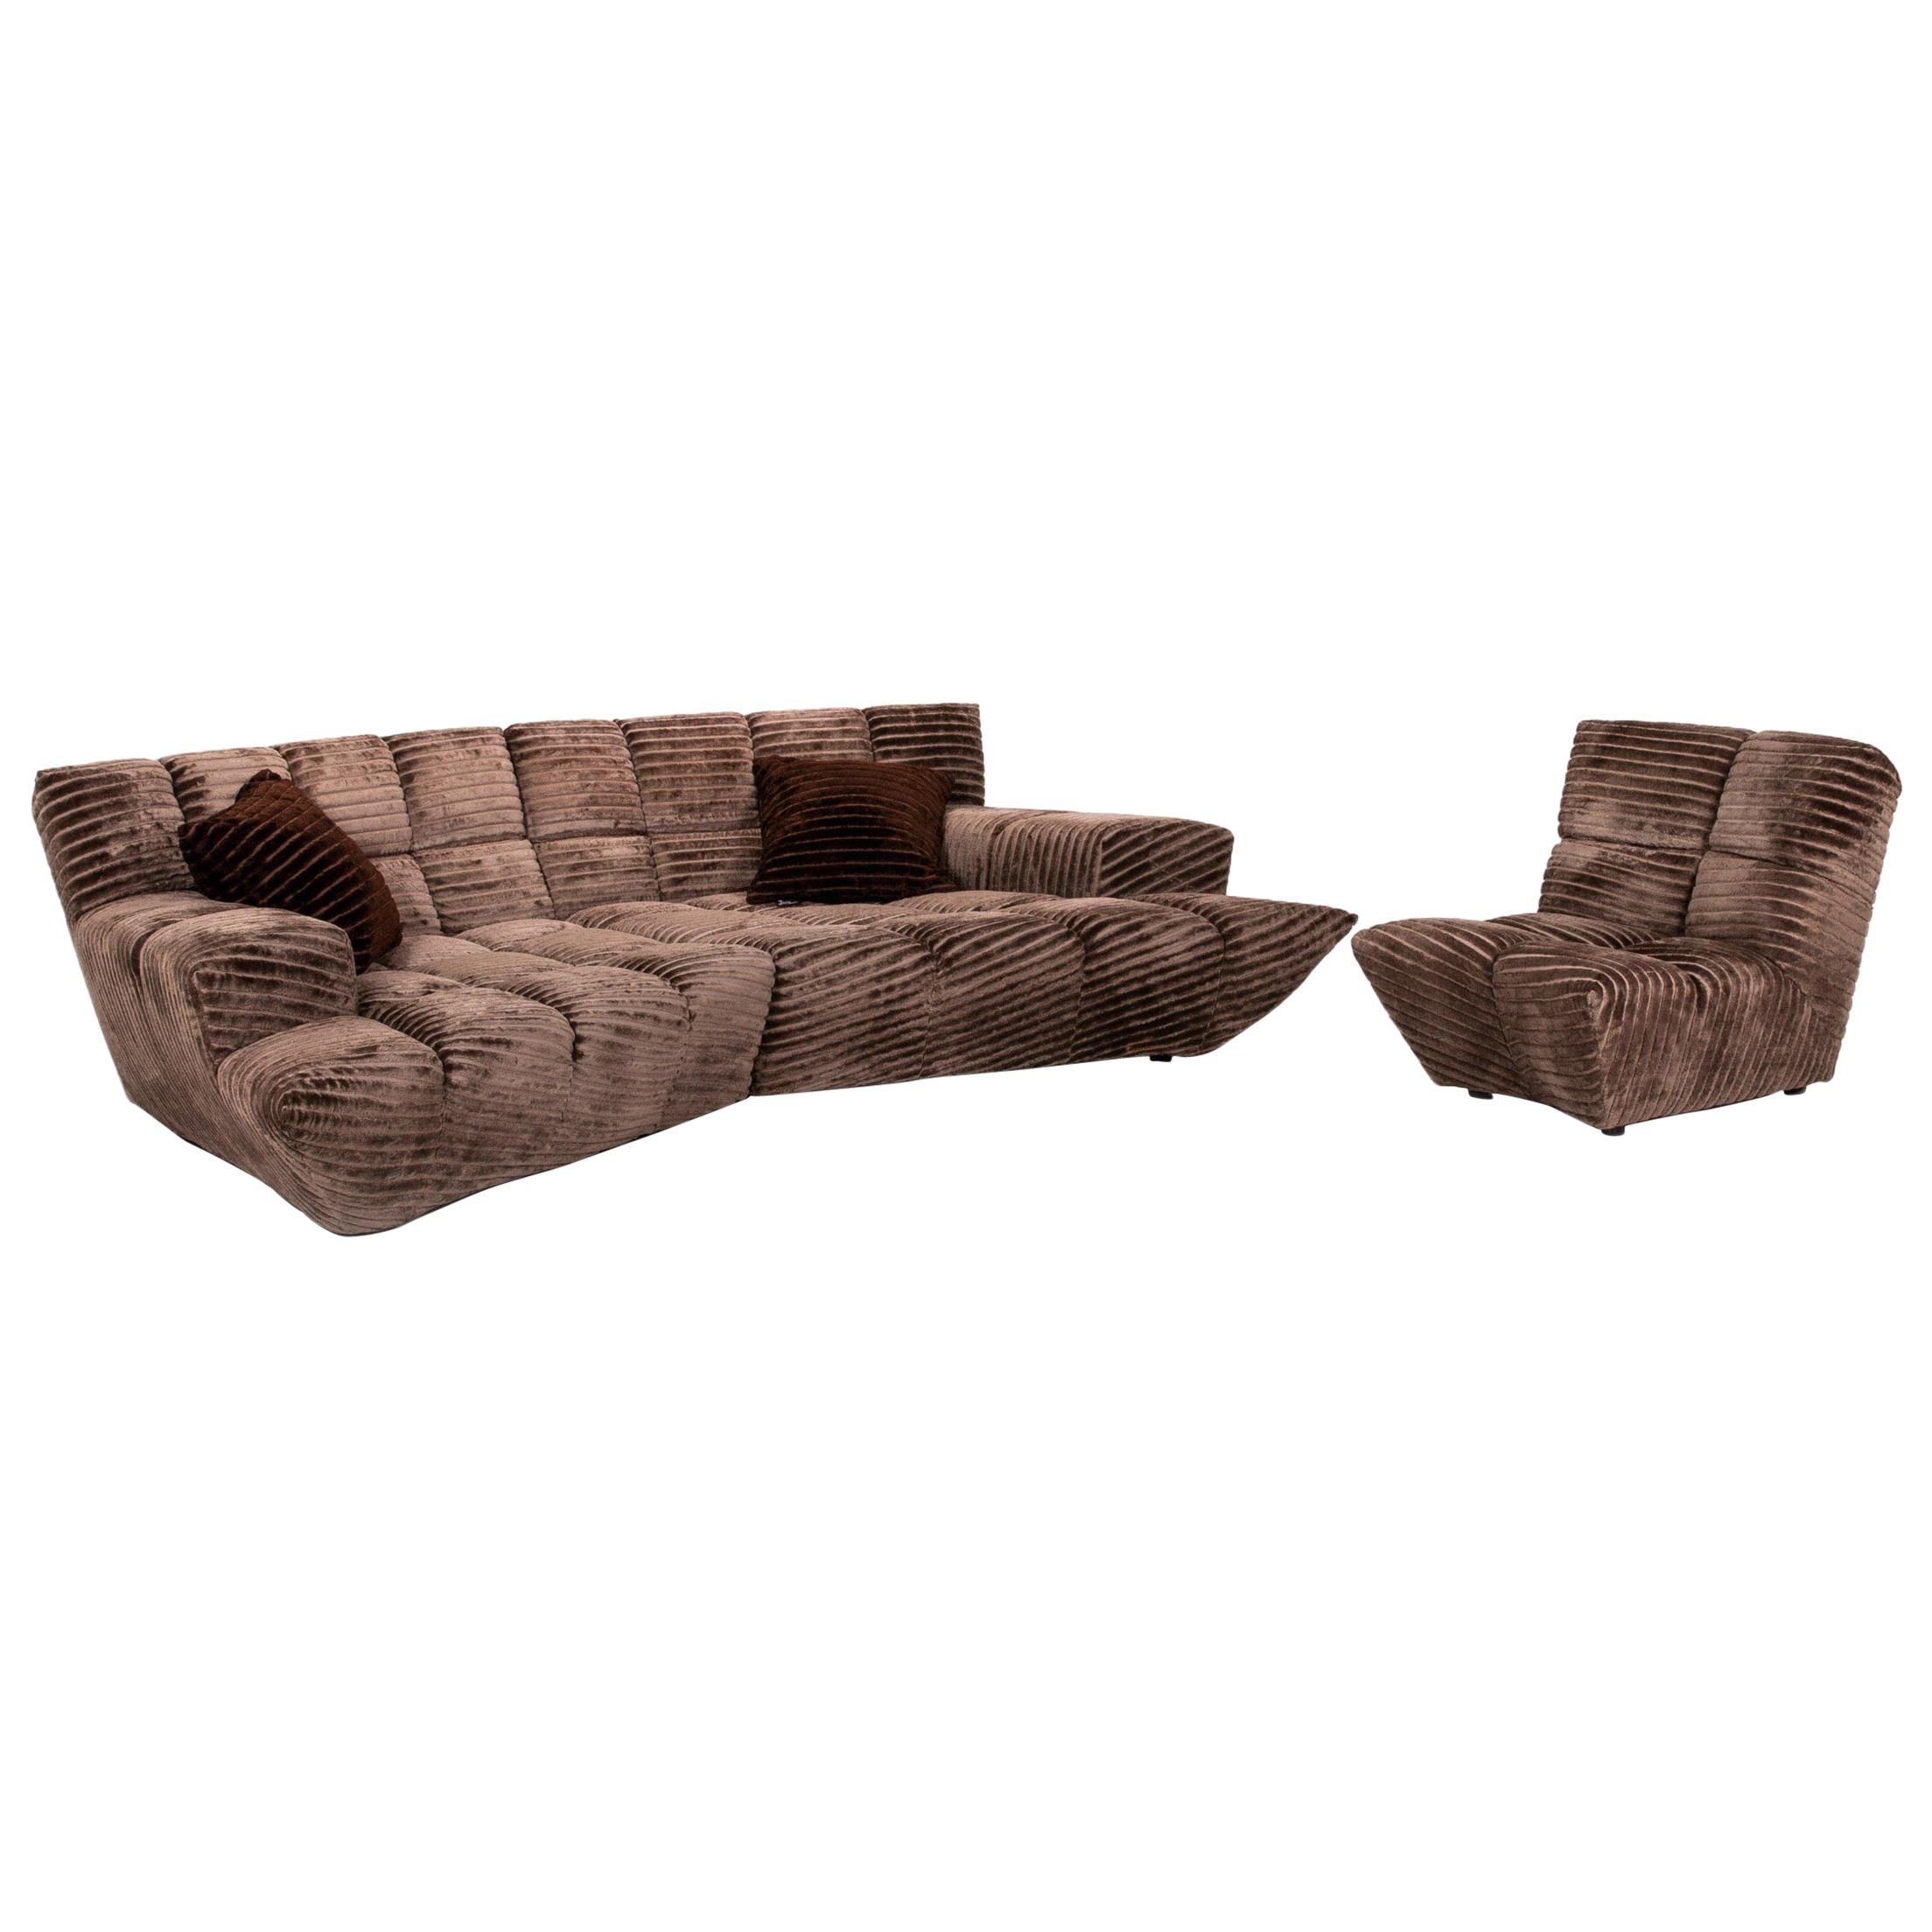 We present to you a Bretz Cloud 7 velvet fabric sofa set brown 1x corner sofa 1x armchair.

Product measurements in centimeters:

Depth 193
Width 253
Height 78
Seat height 39
Rest height 52
Seat depth 90
Seat width 180
Back height